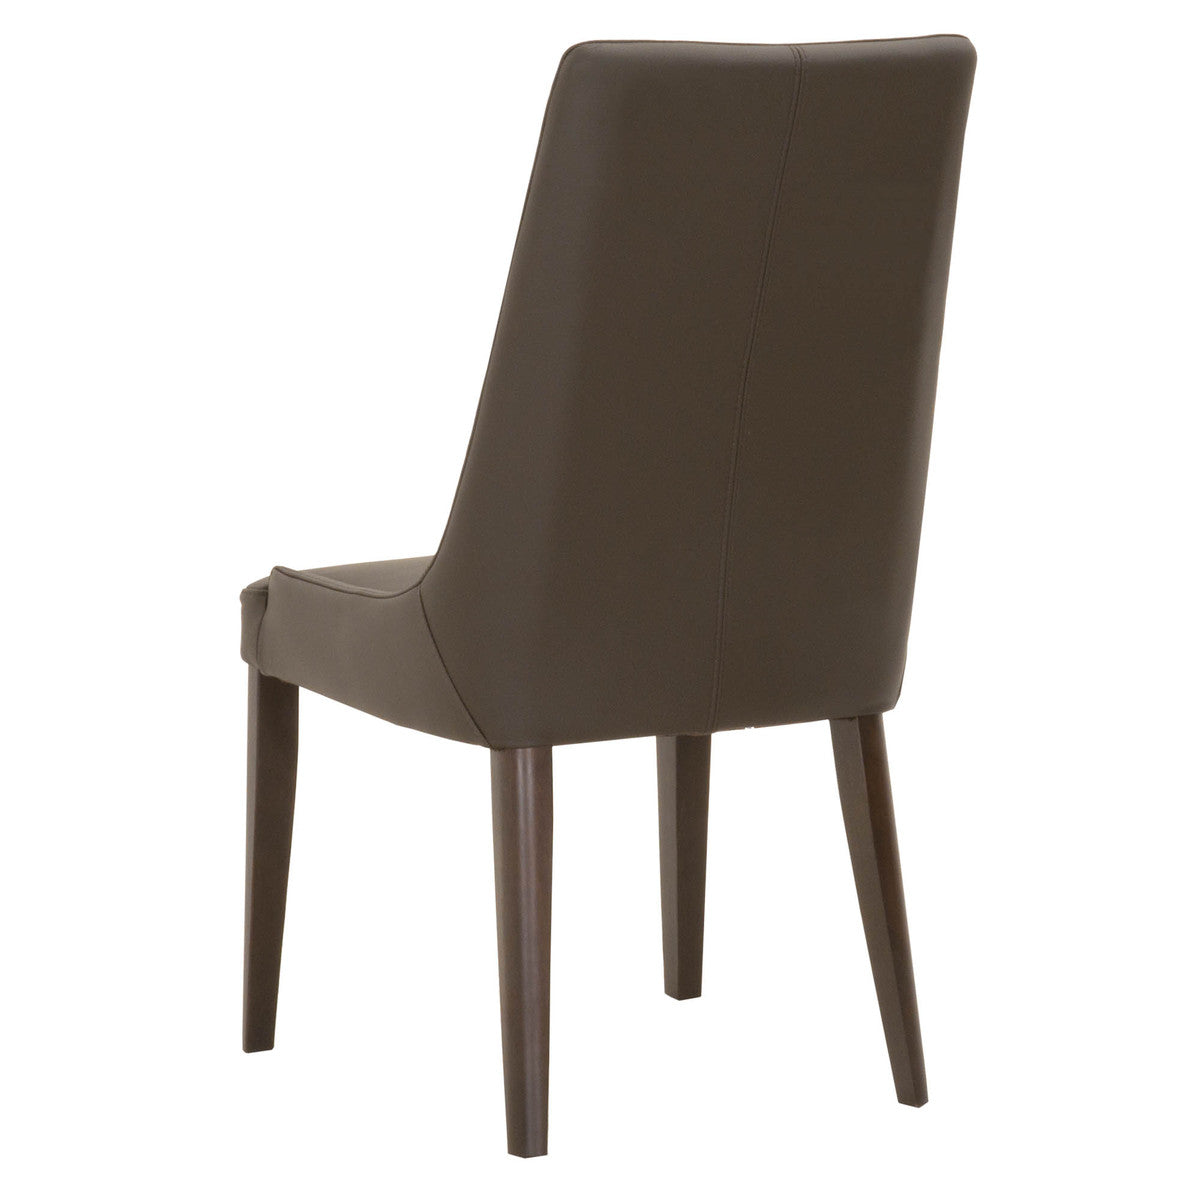 Aurora Dining Chair in Dark Umber Top Grain Leather, Dark Wenge, Set of 2 - 5131.DKUMB/DW